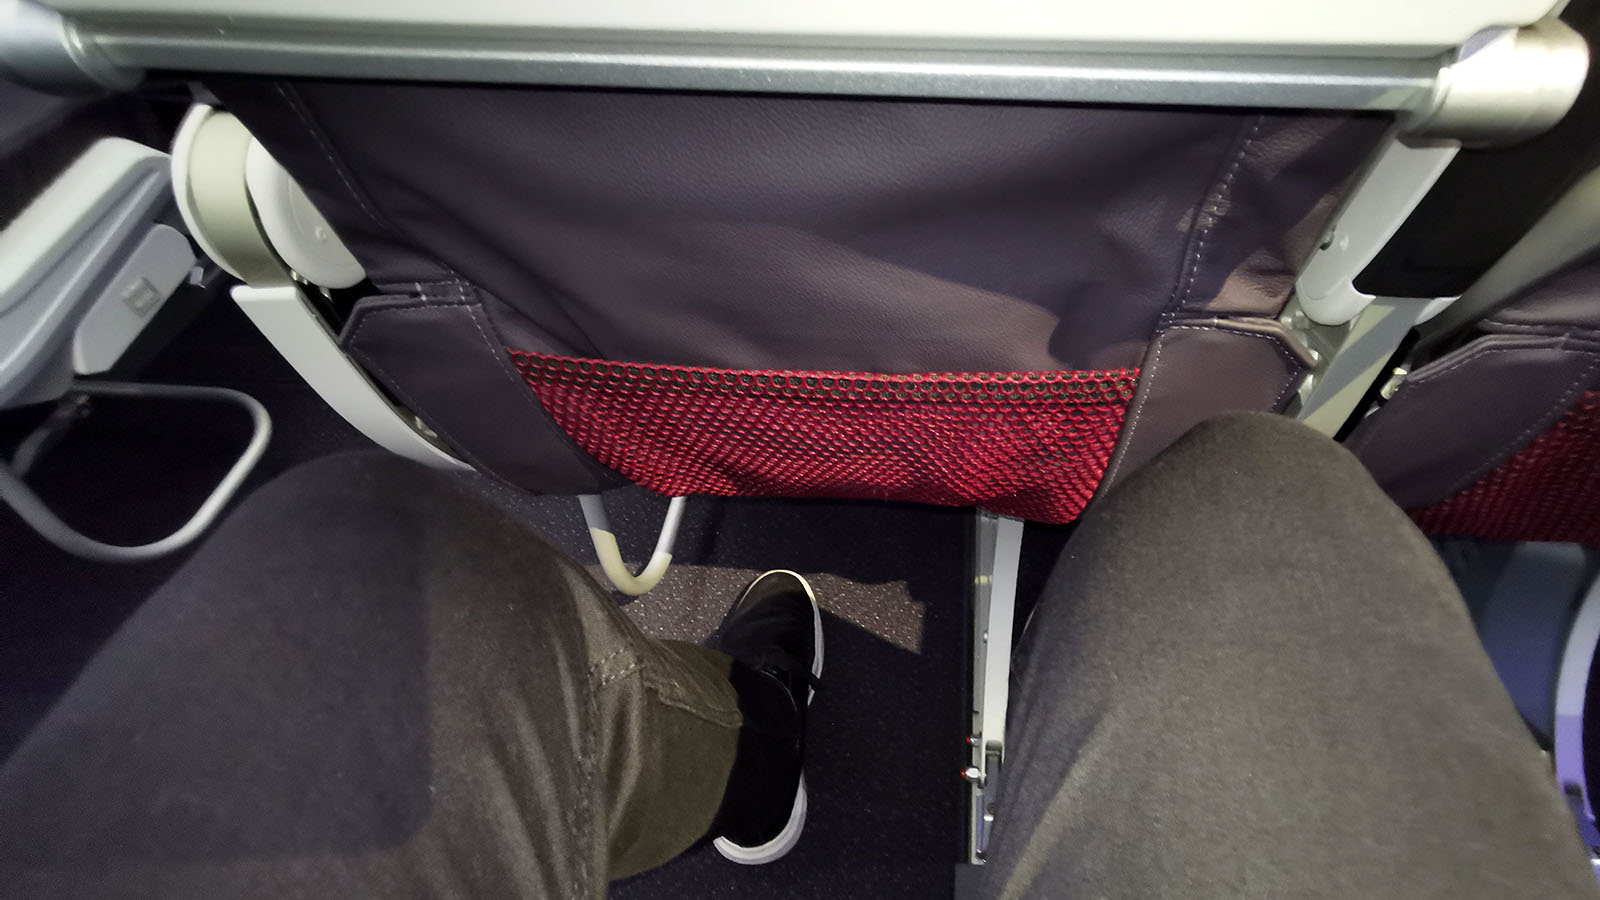 Virgin Australia Boeing 737 MAX 8 Economy Class knee space